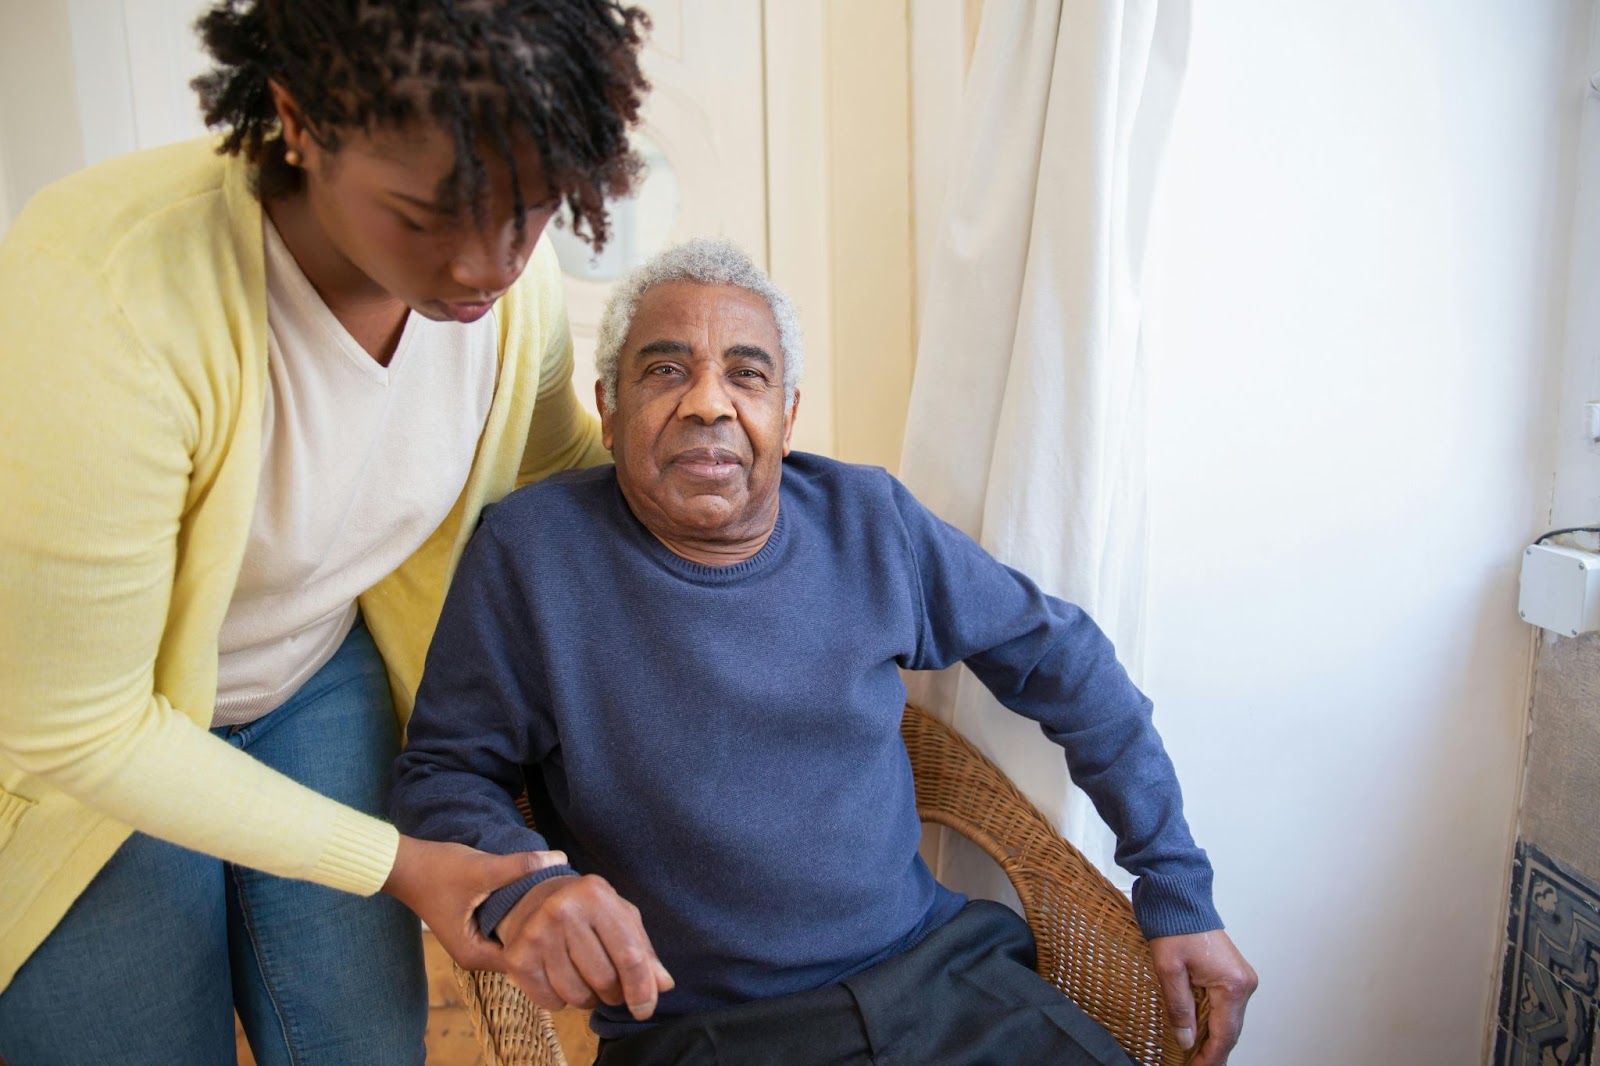 A caregiver helping a senior citizen stand up